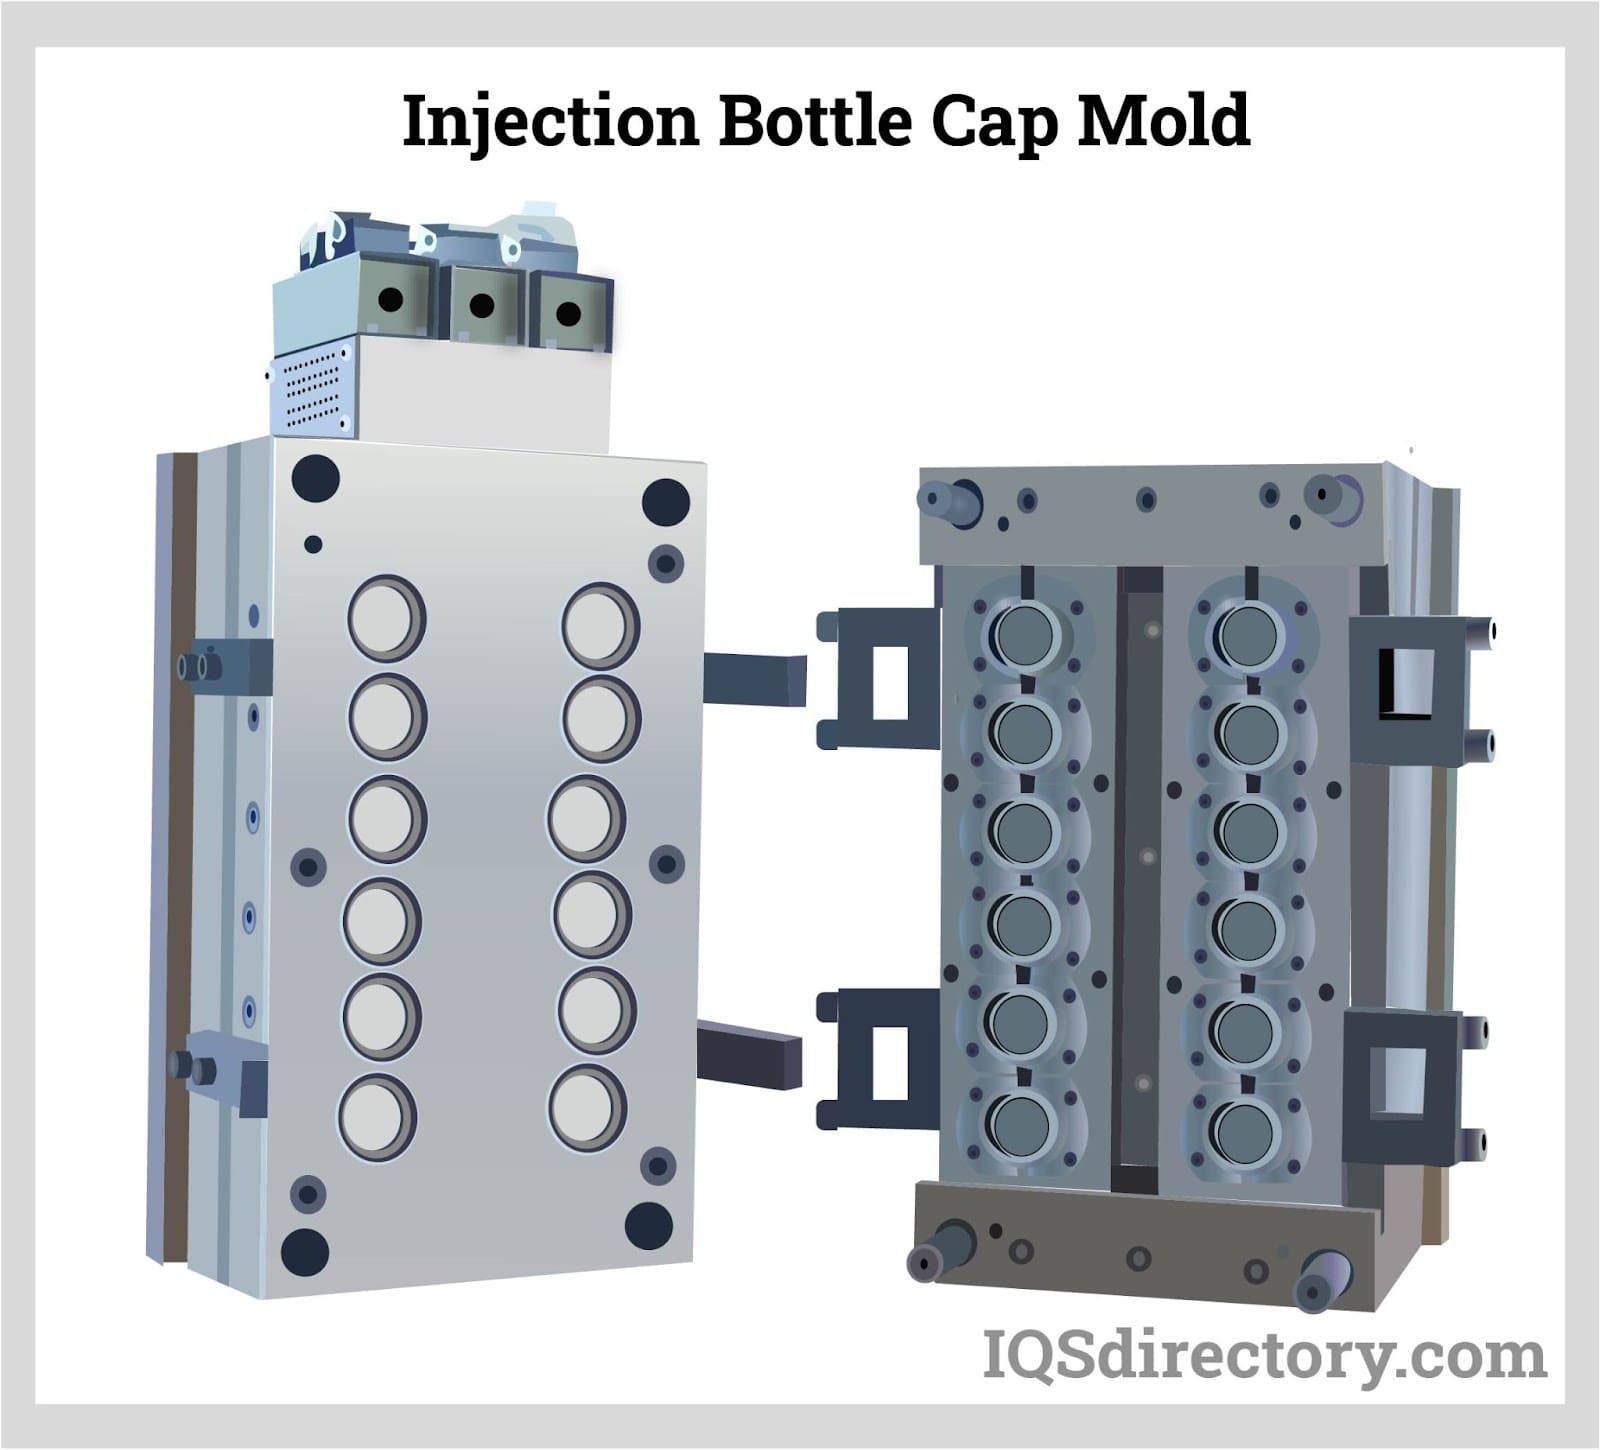 Injection Bottle Cap Mold